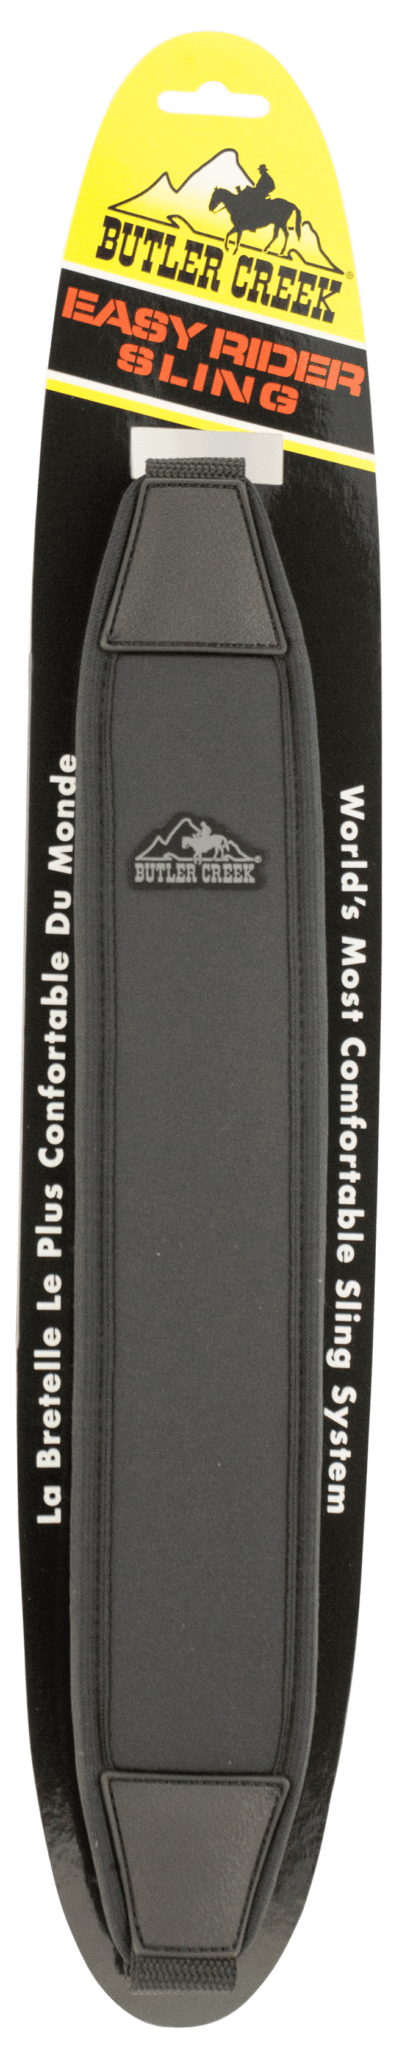 Butler Creek 80073 Easy Rider Sling made of Black Neoprene with Sharkskin Back 48″ OAL & Adjustable Design for Rifles